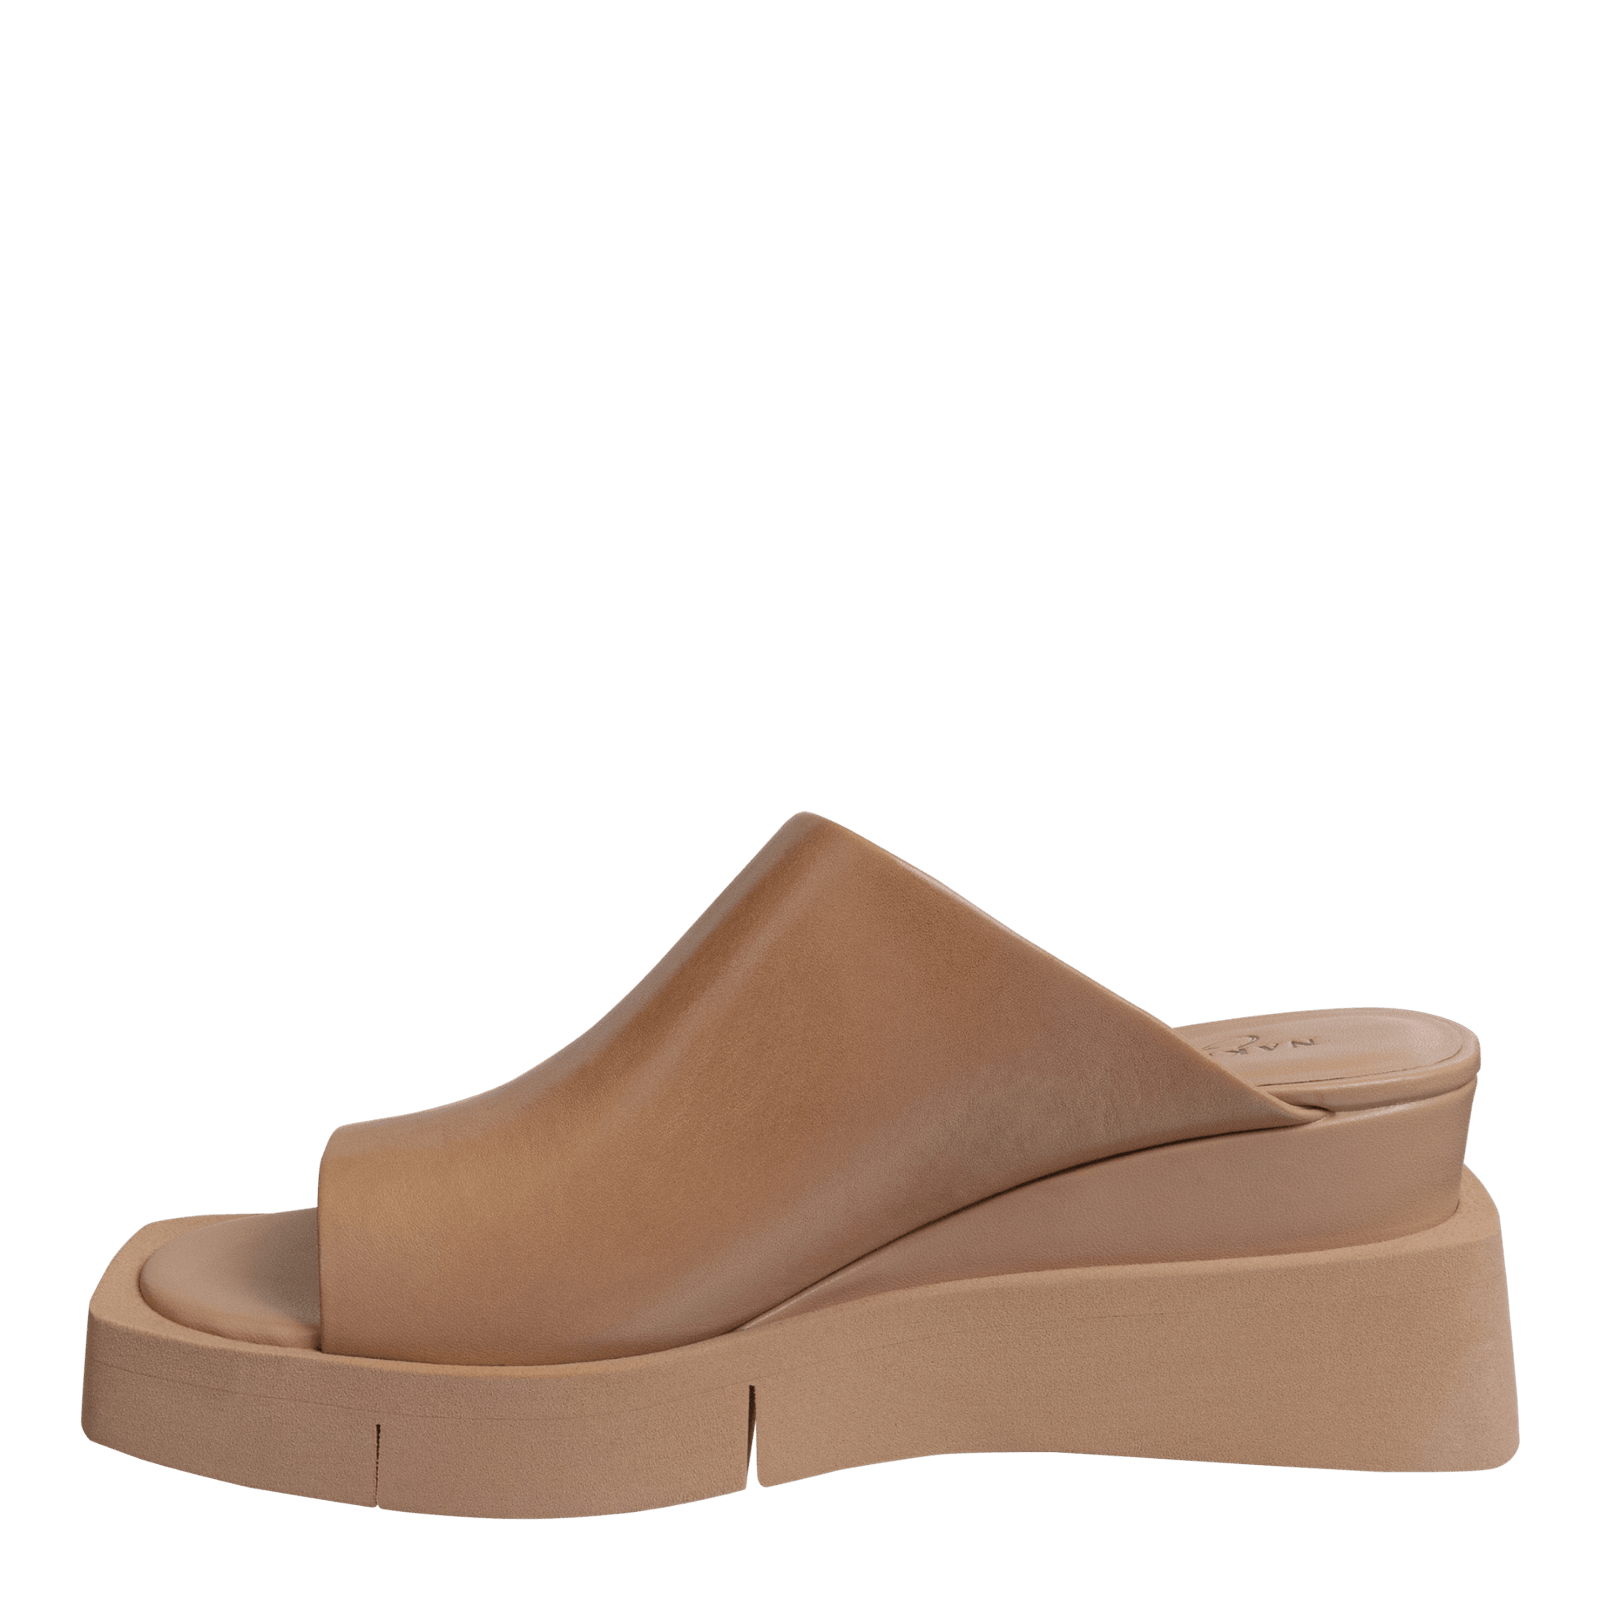 NAKED FEET - INFINITY in CAMEL Wedge Sandals WOMEN FOOTWEAR NAKED FEET 